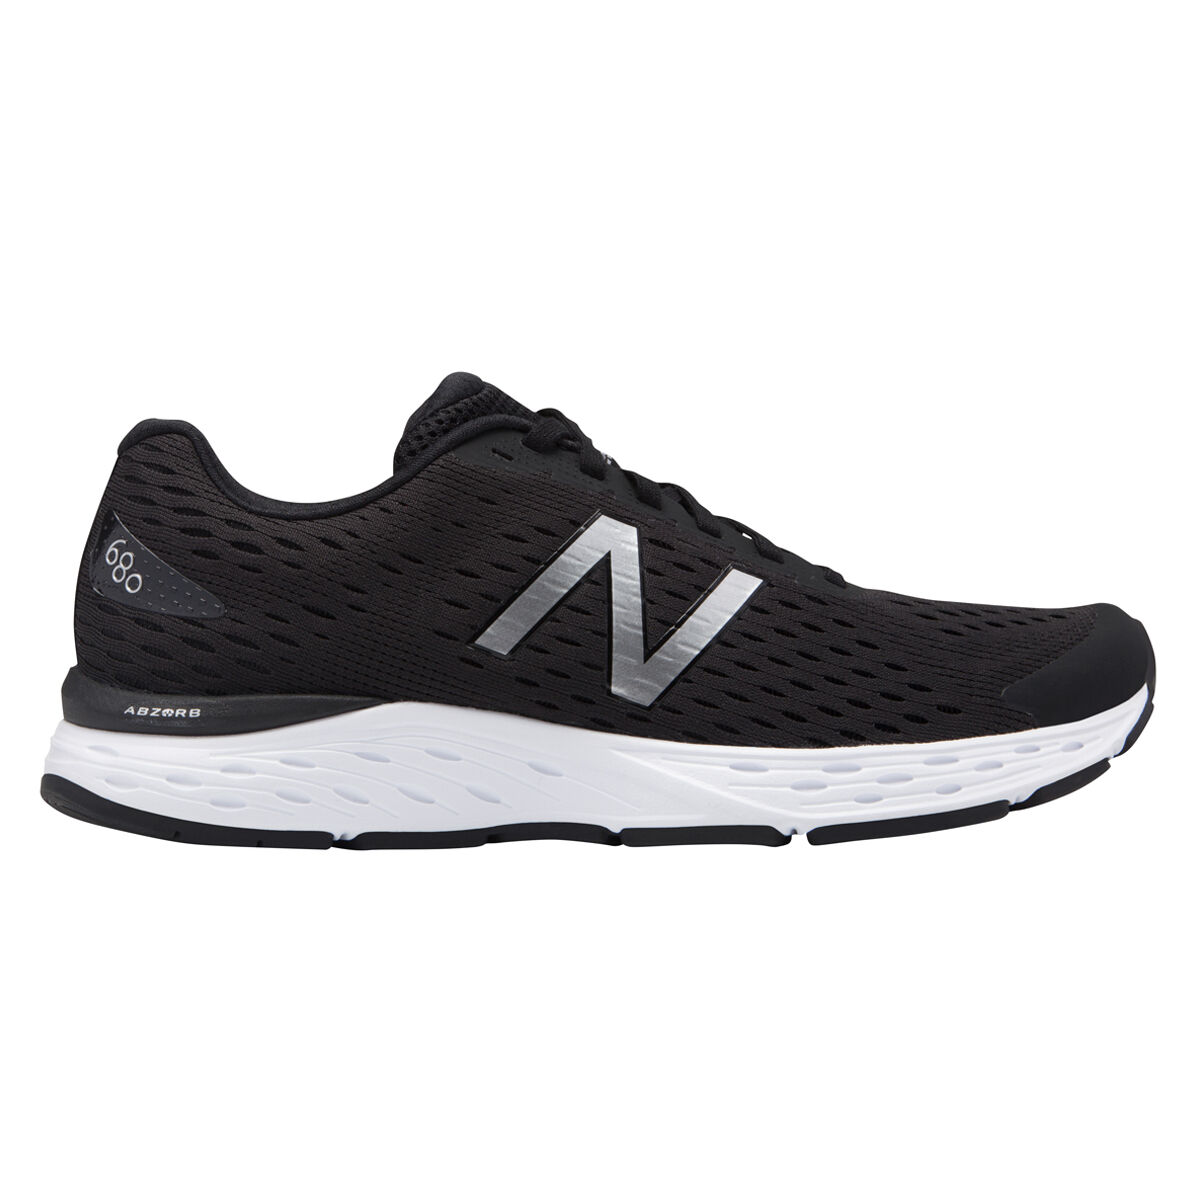 New Balance 680 v5 Mens Running Shoes 